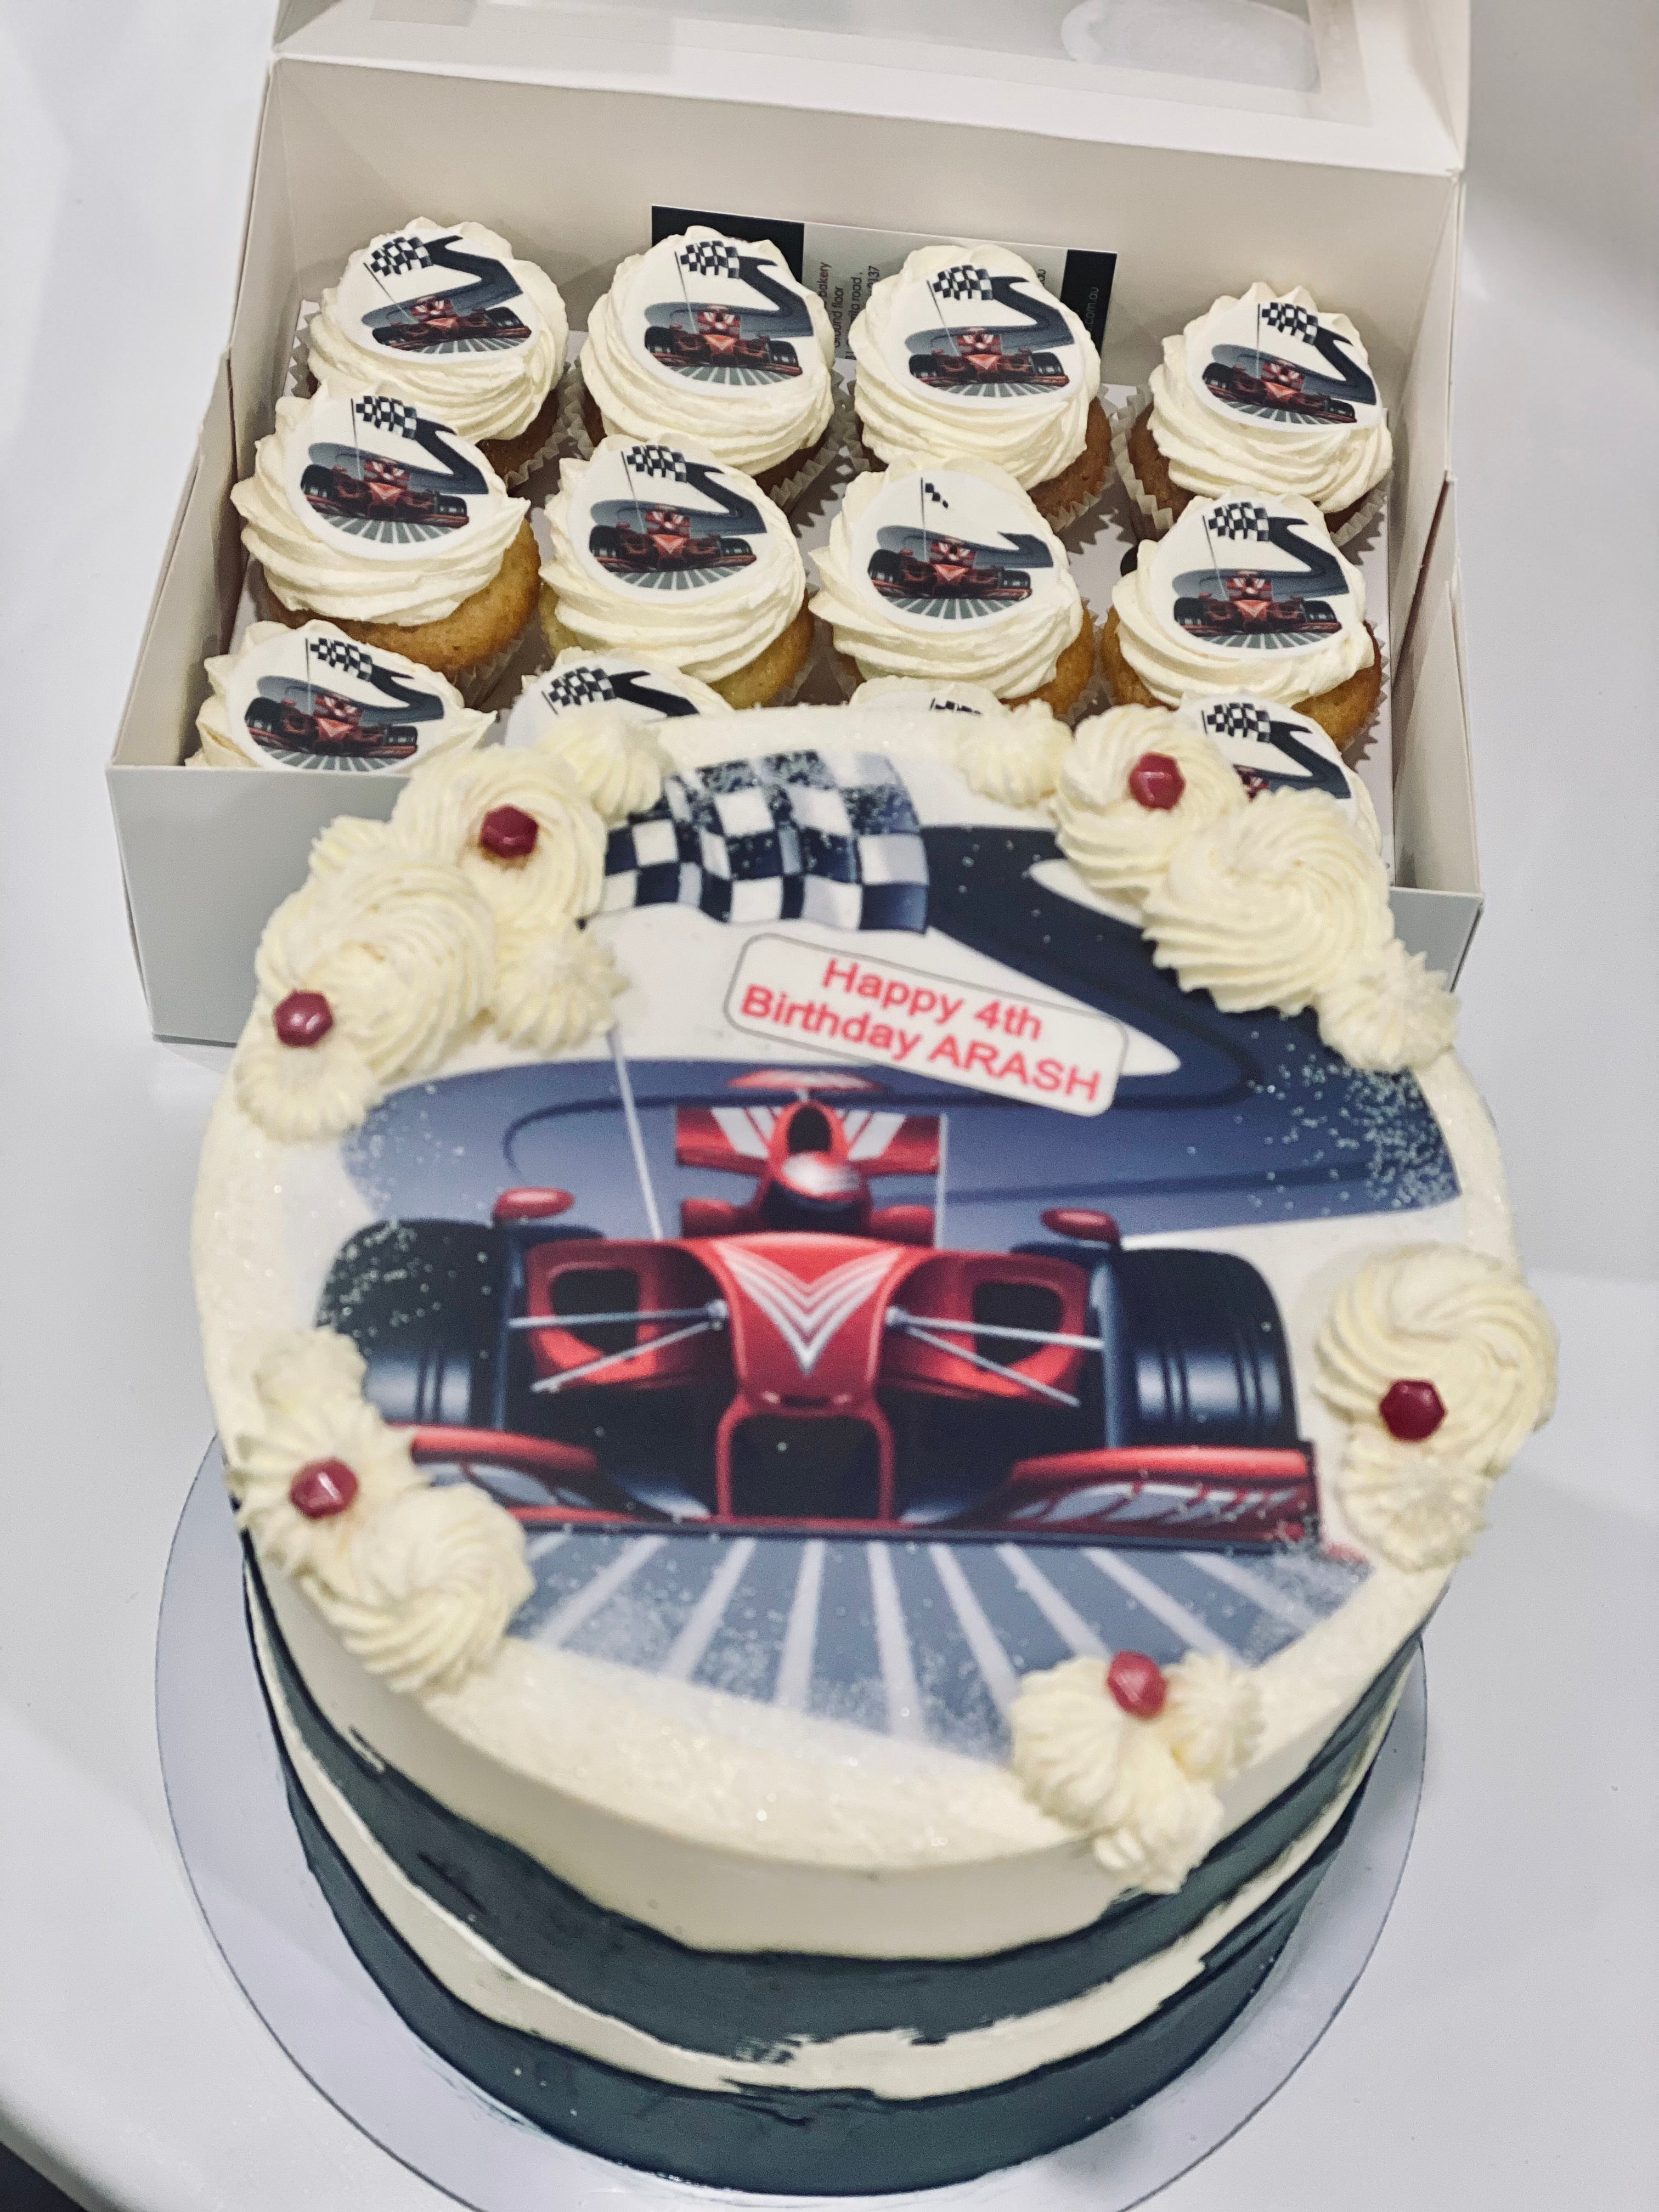 6" RACING CAR CHECKS cake + 24 mini cupcakes